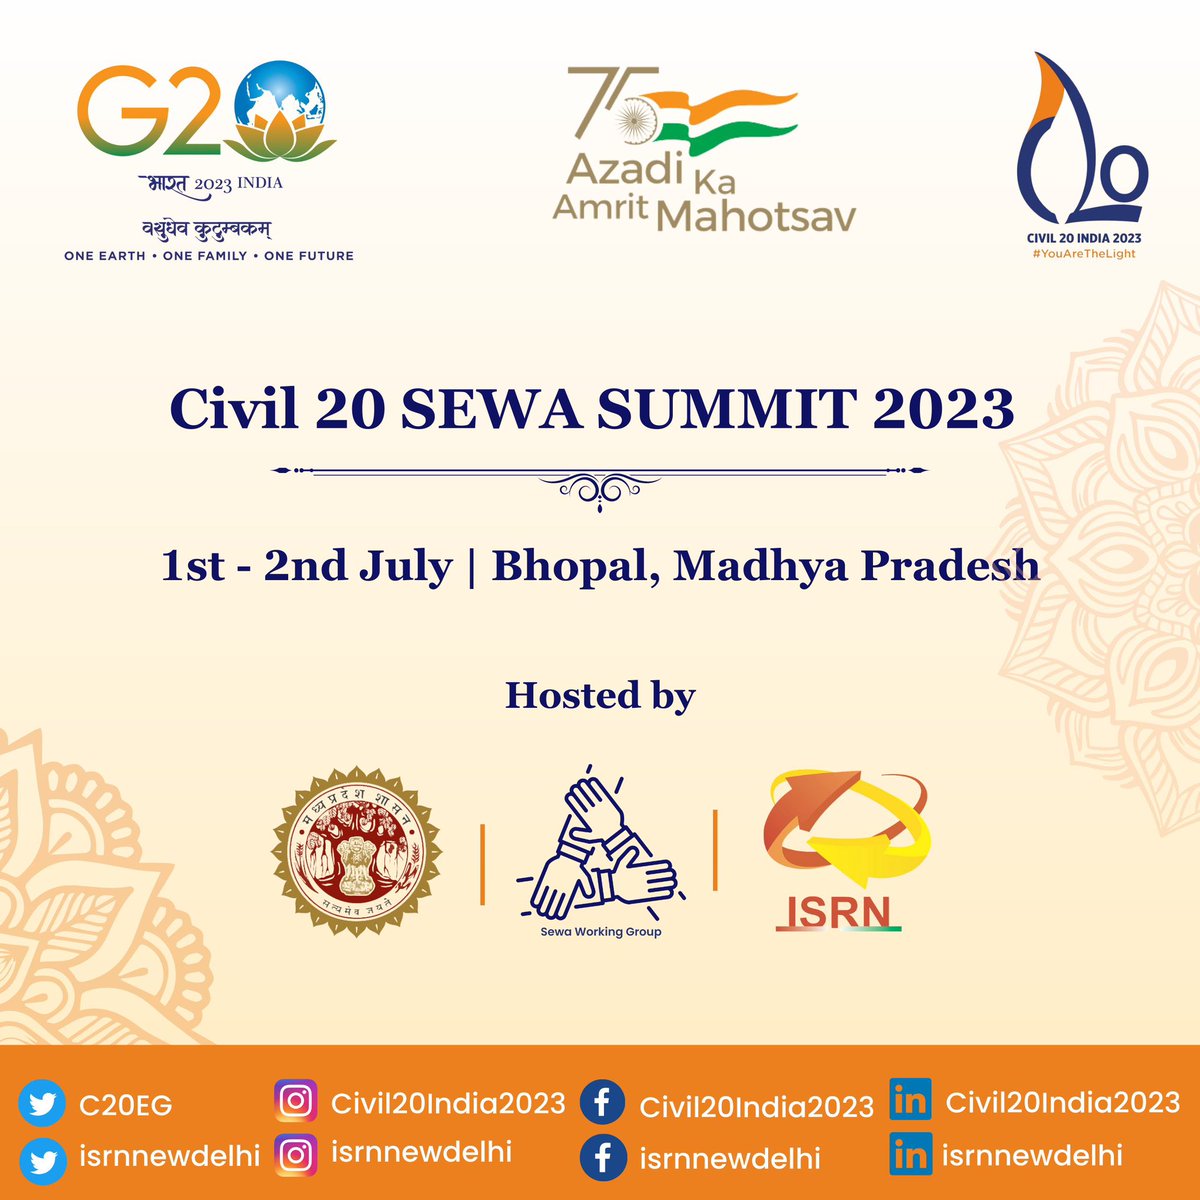 C20 WG on Sewa-Sense of Service, Philanthropy and Volunteerism is holding its summit in Bhopal, Madhya Pradesh on 1-2 July.

#Civil20India2023 #YouAreTheLight